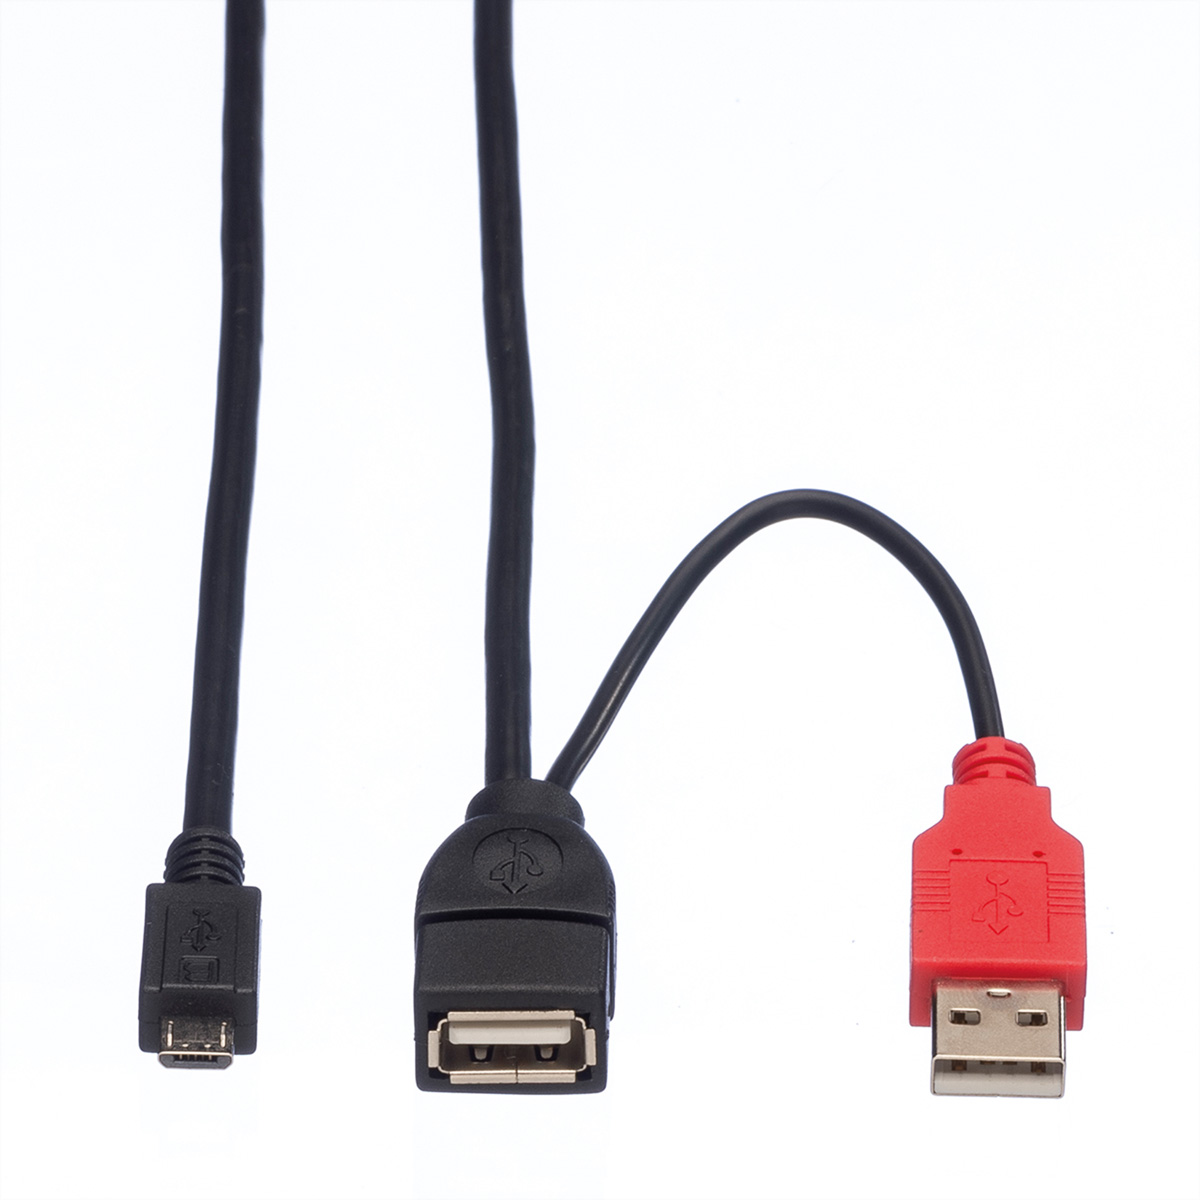 B ST, ROLINE USB USB 2.0 A 2.0 - Stromkabel / (ST BU) 1m 2x Y-Kabel, Micro und OTG- Typ